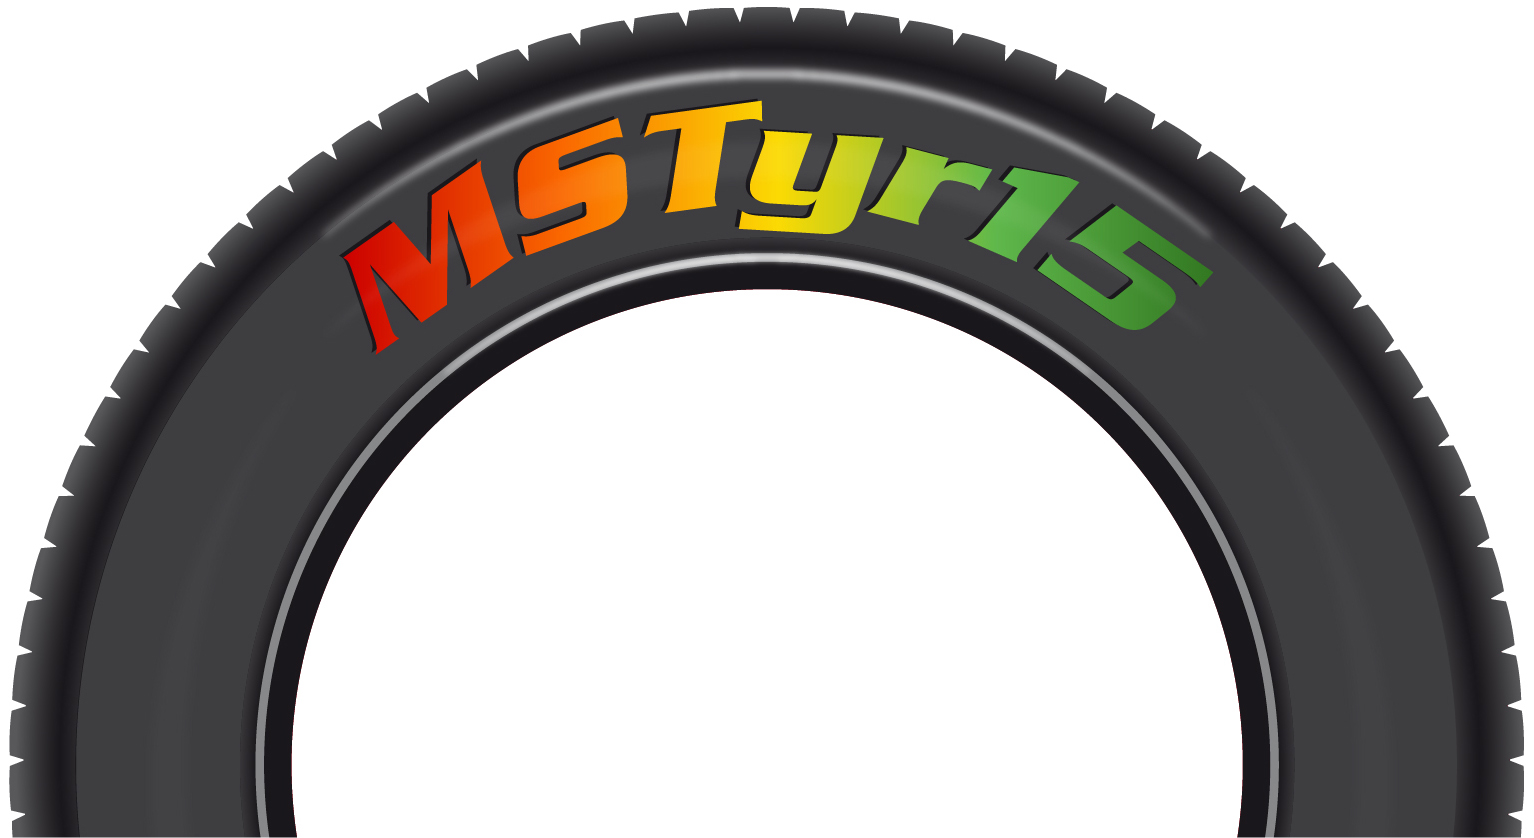 Logo MSTyr15